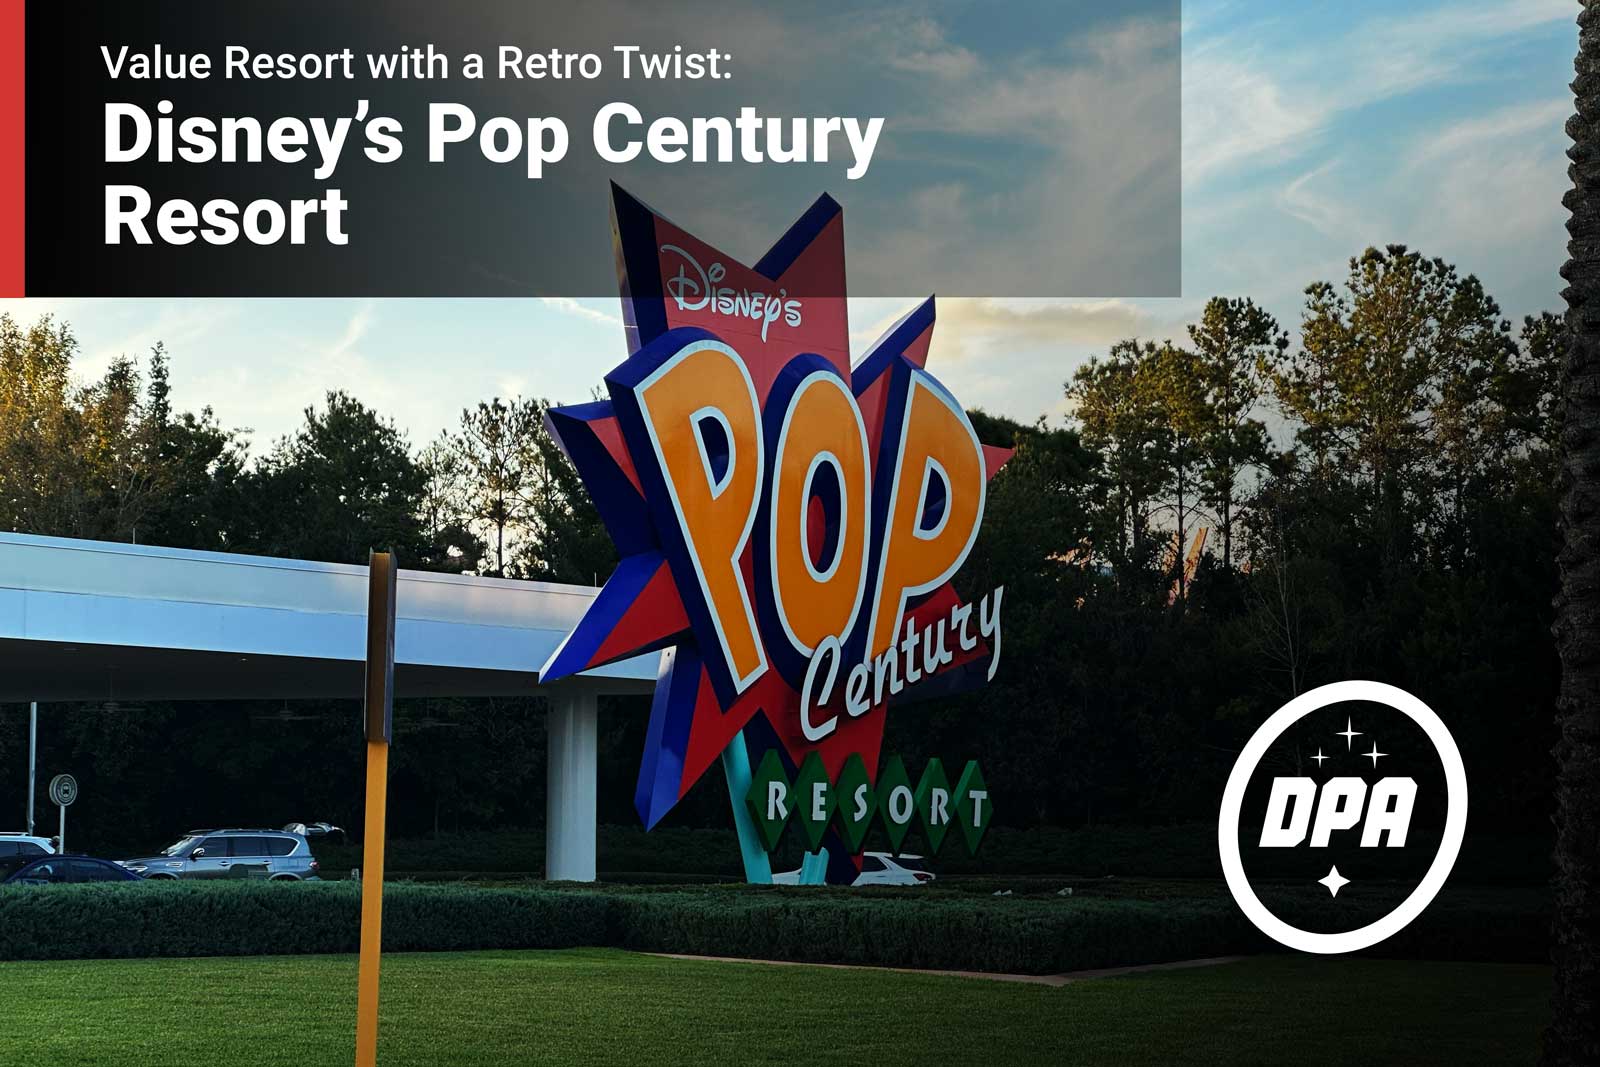 disney's pop century value resort